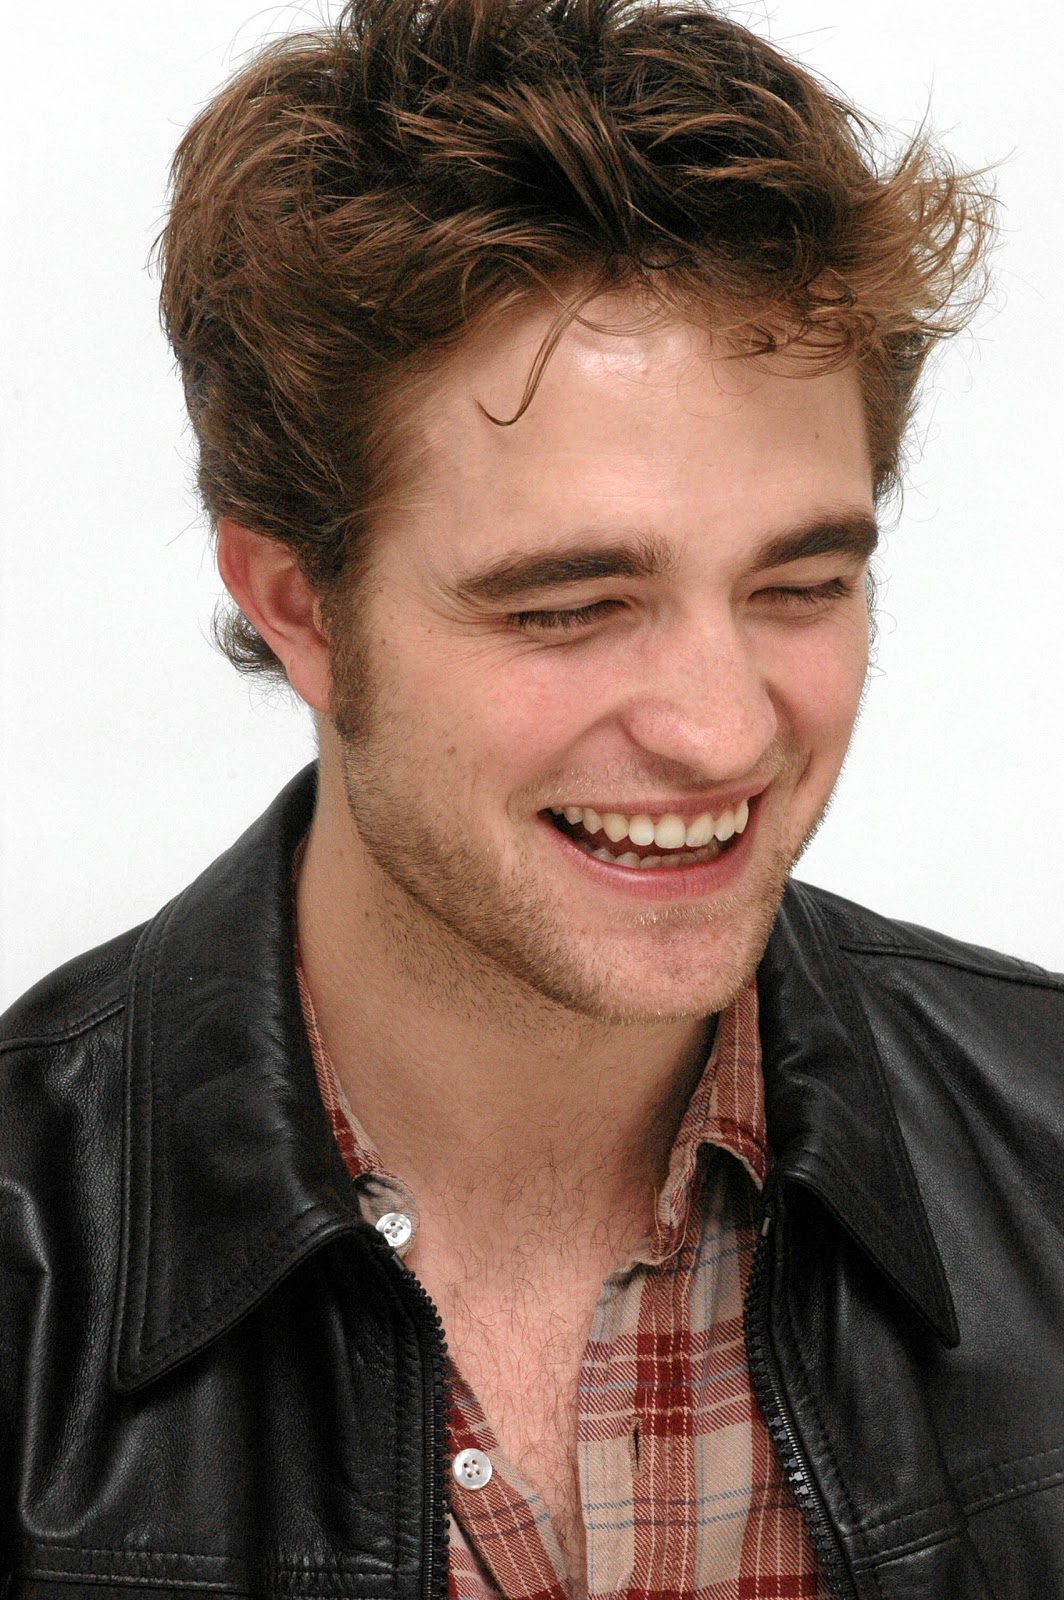 Robert Pattinson Australia: The Smile That Lights Up My World1064 x 1600